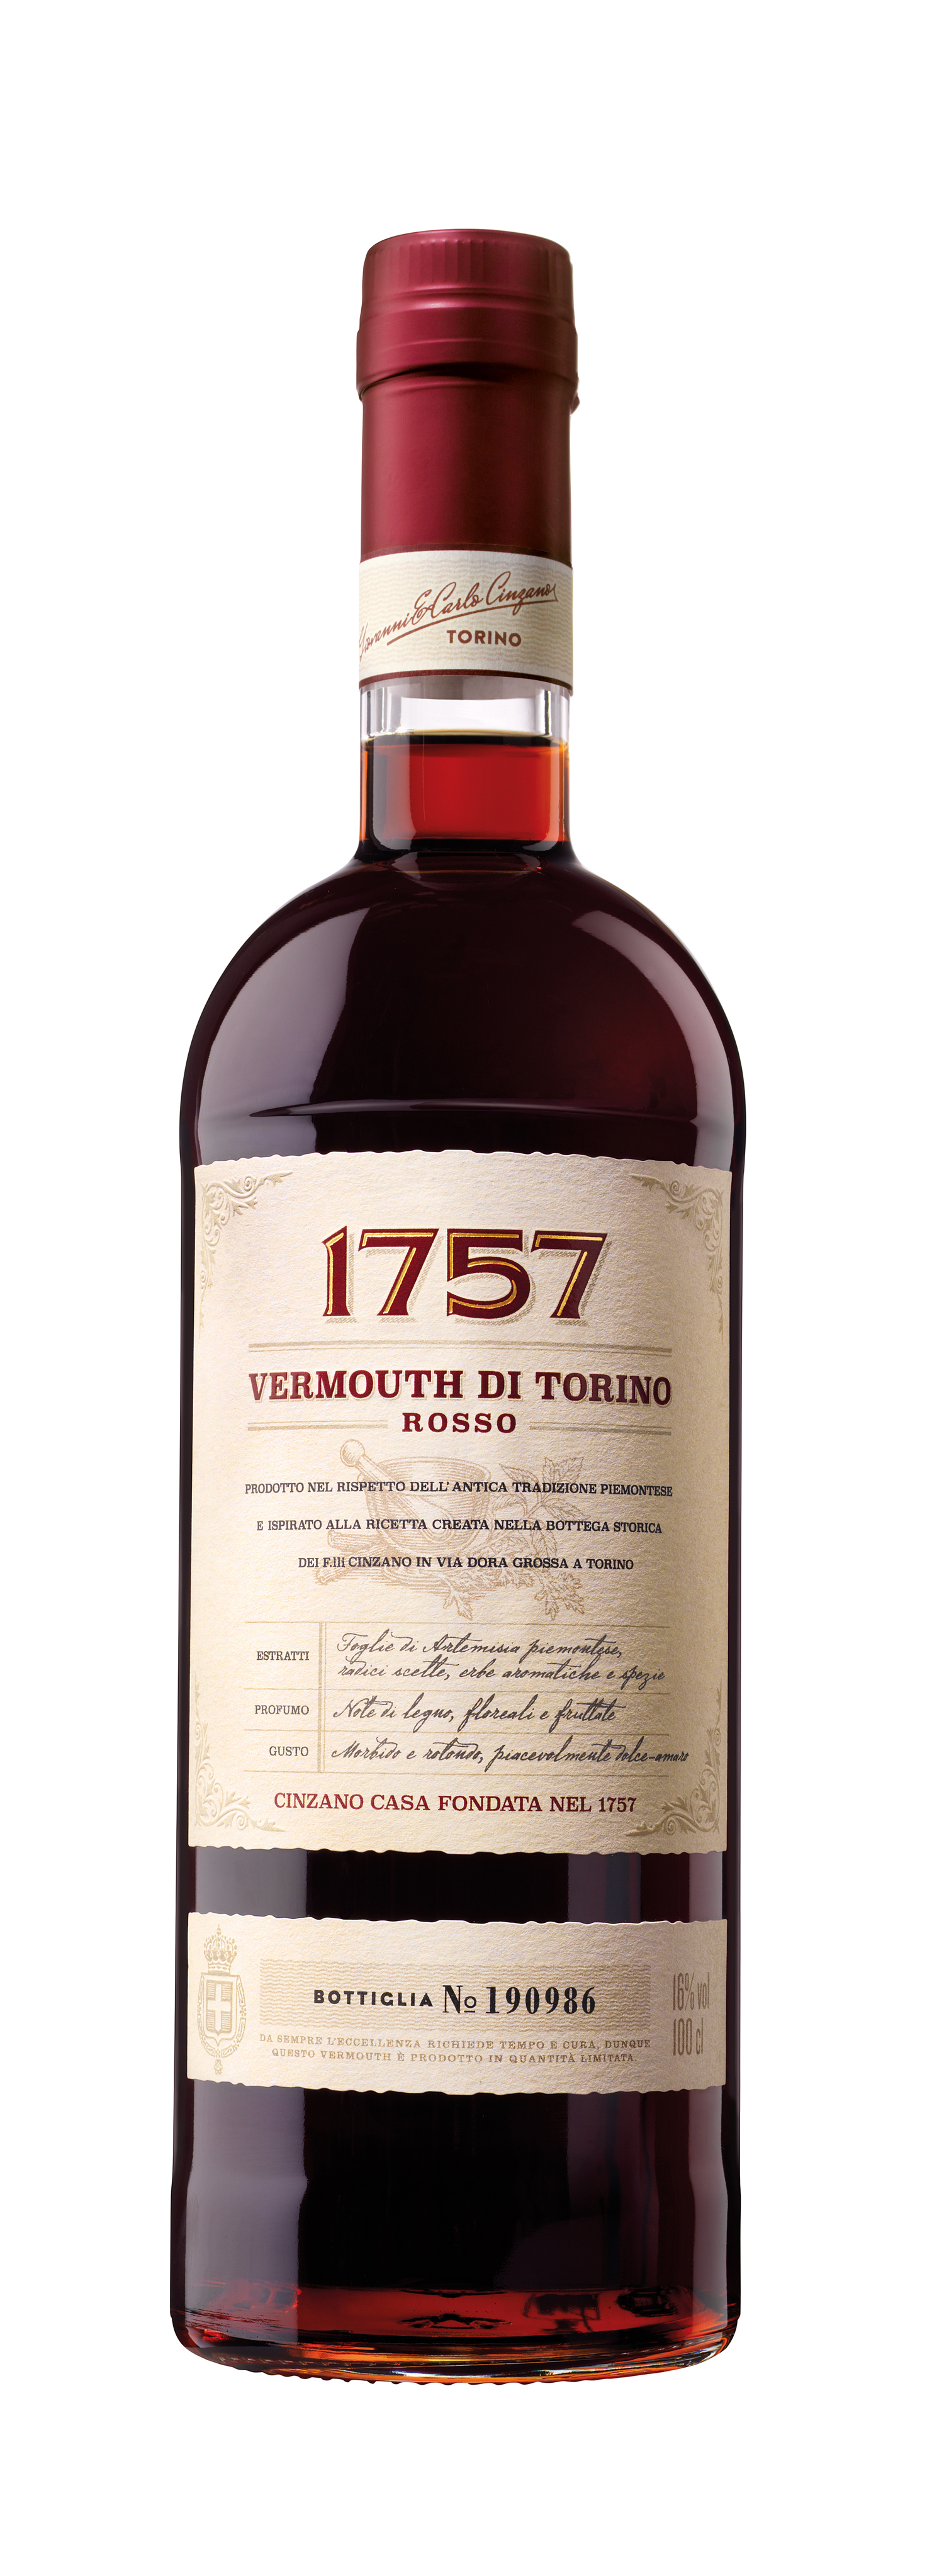 Cinzano 1757 Rosso Vermouth                                                                         